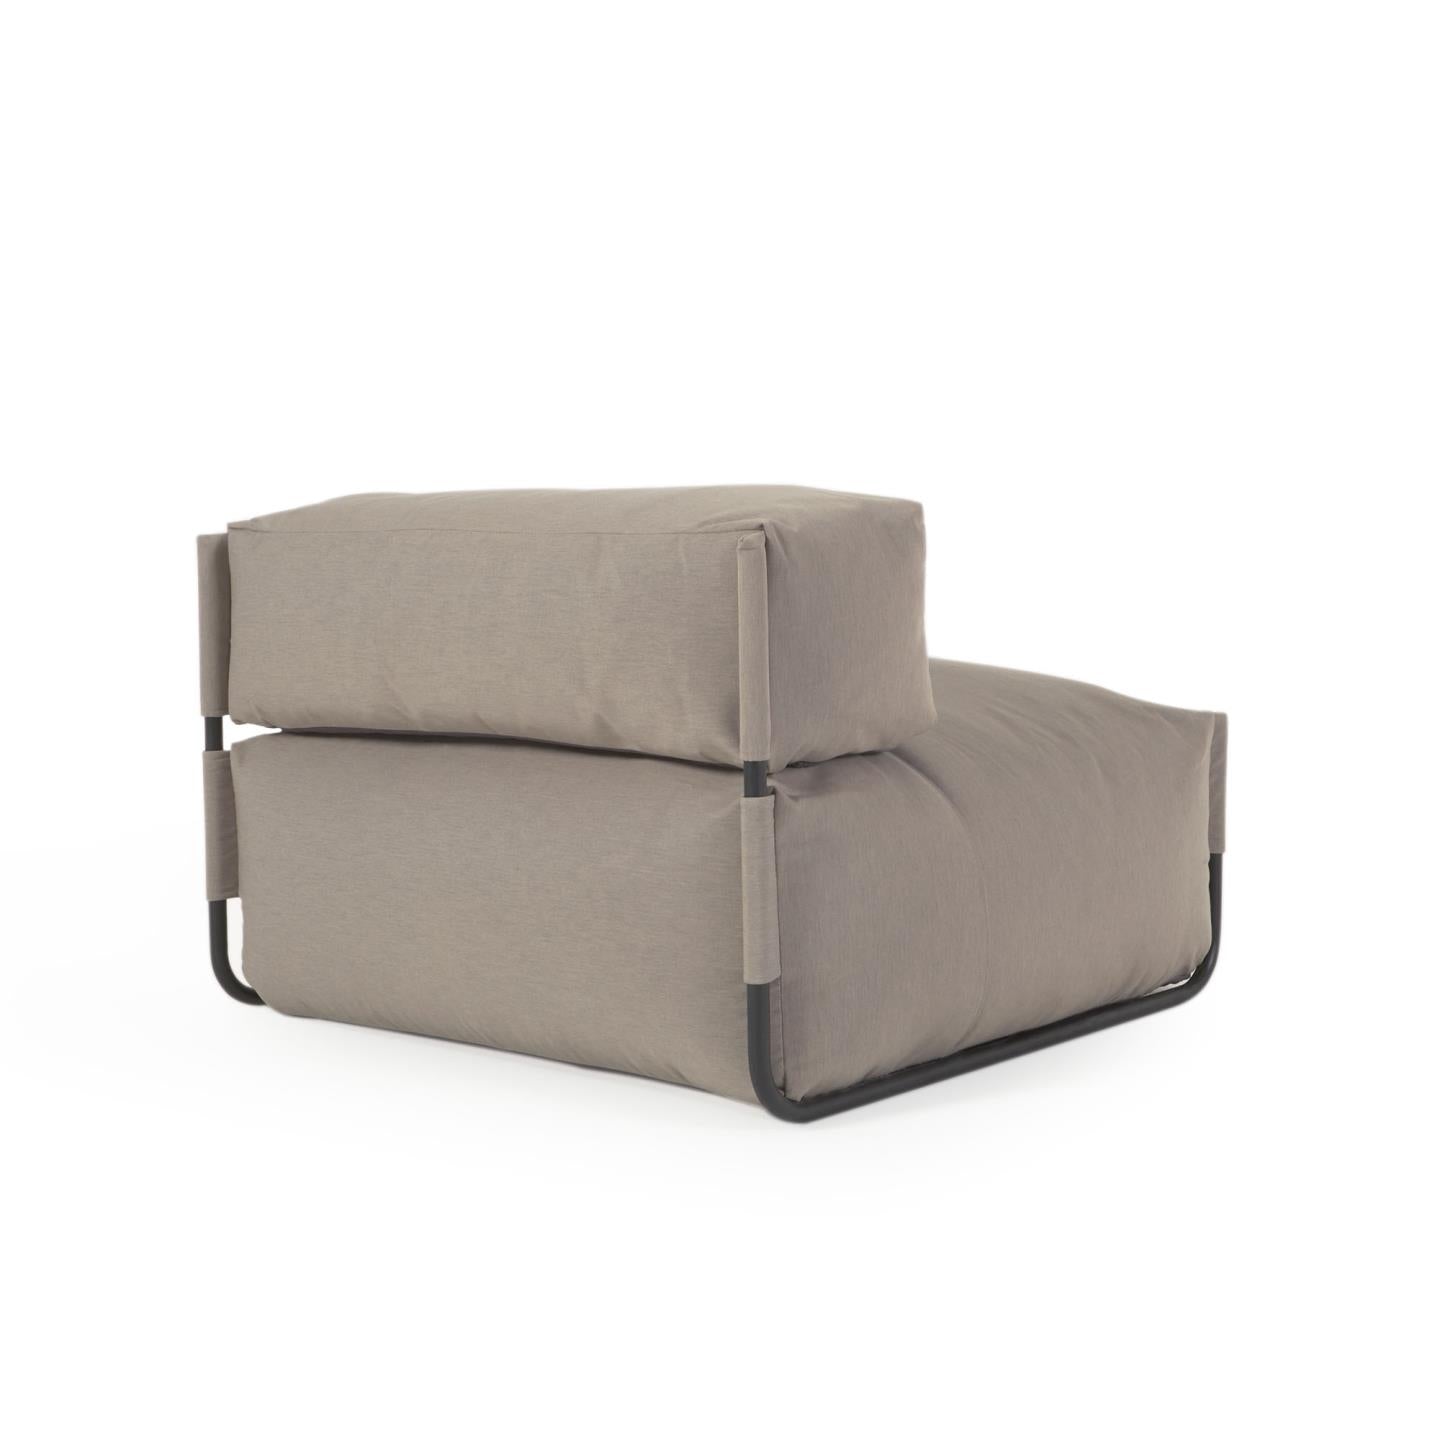 Square modular 100% outdoor sofa pouffe w/ backrest, green with black aluminium, 101x101cm